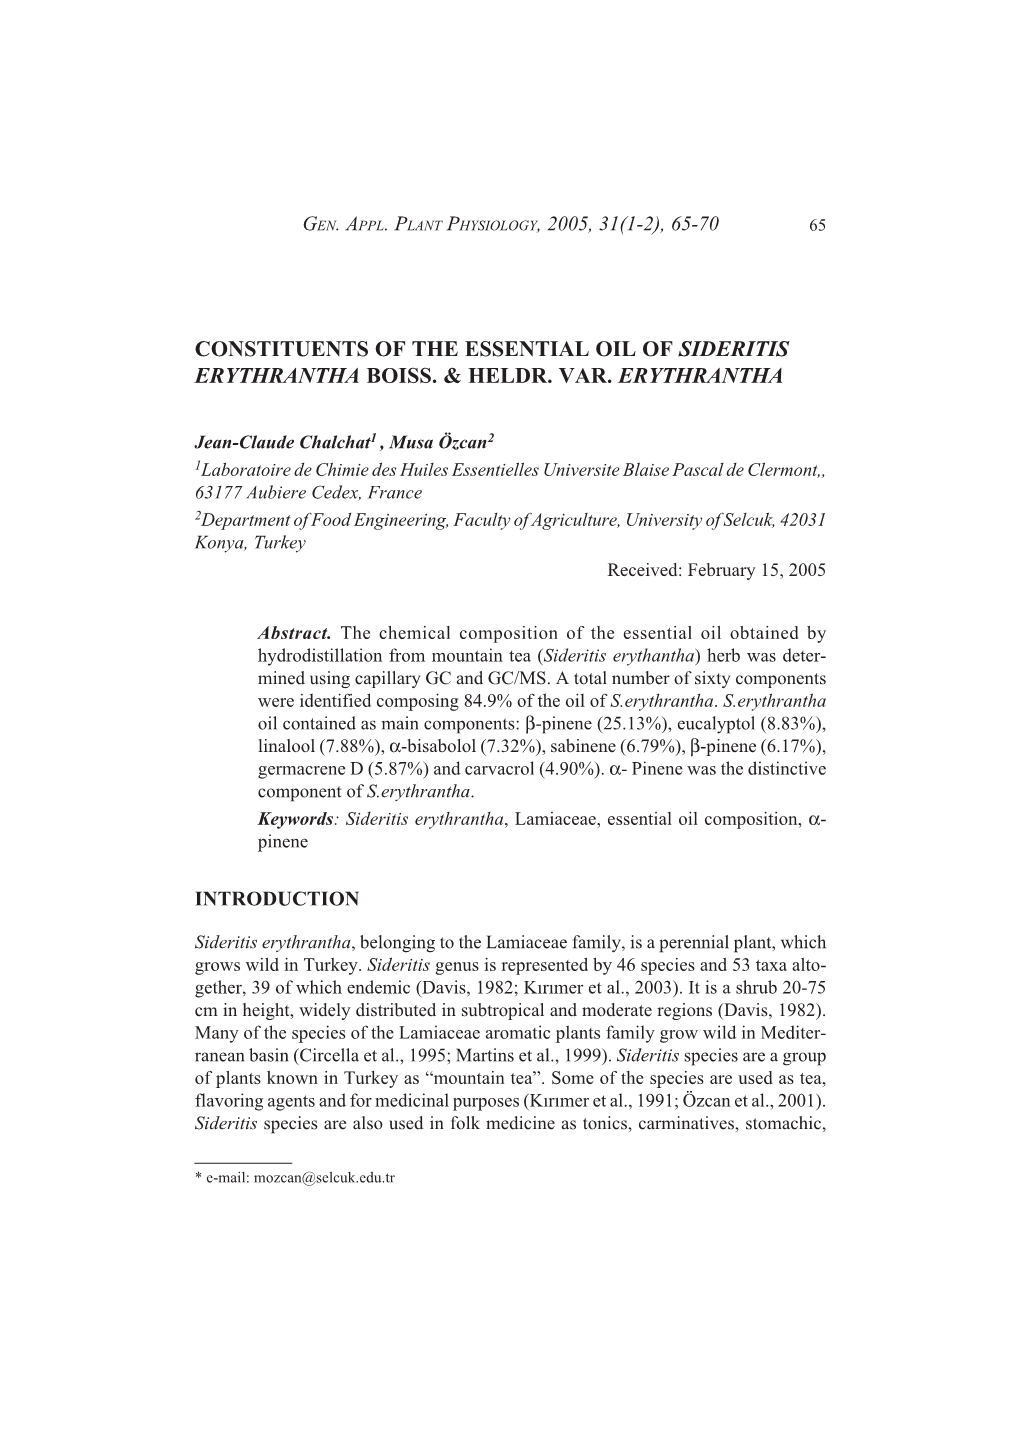 Constituents of the Essential Oil of Sideritis Erythrantha Boiss. & Heldr. Var. Erythrantha